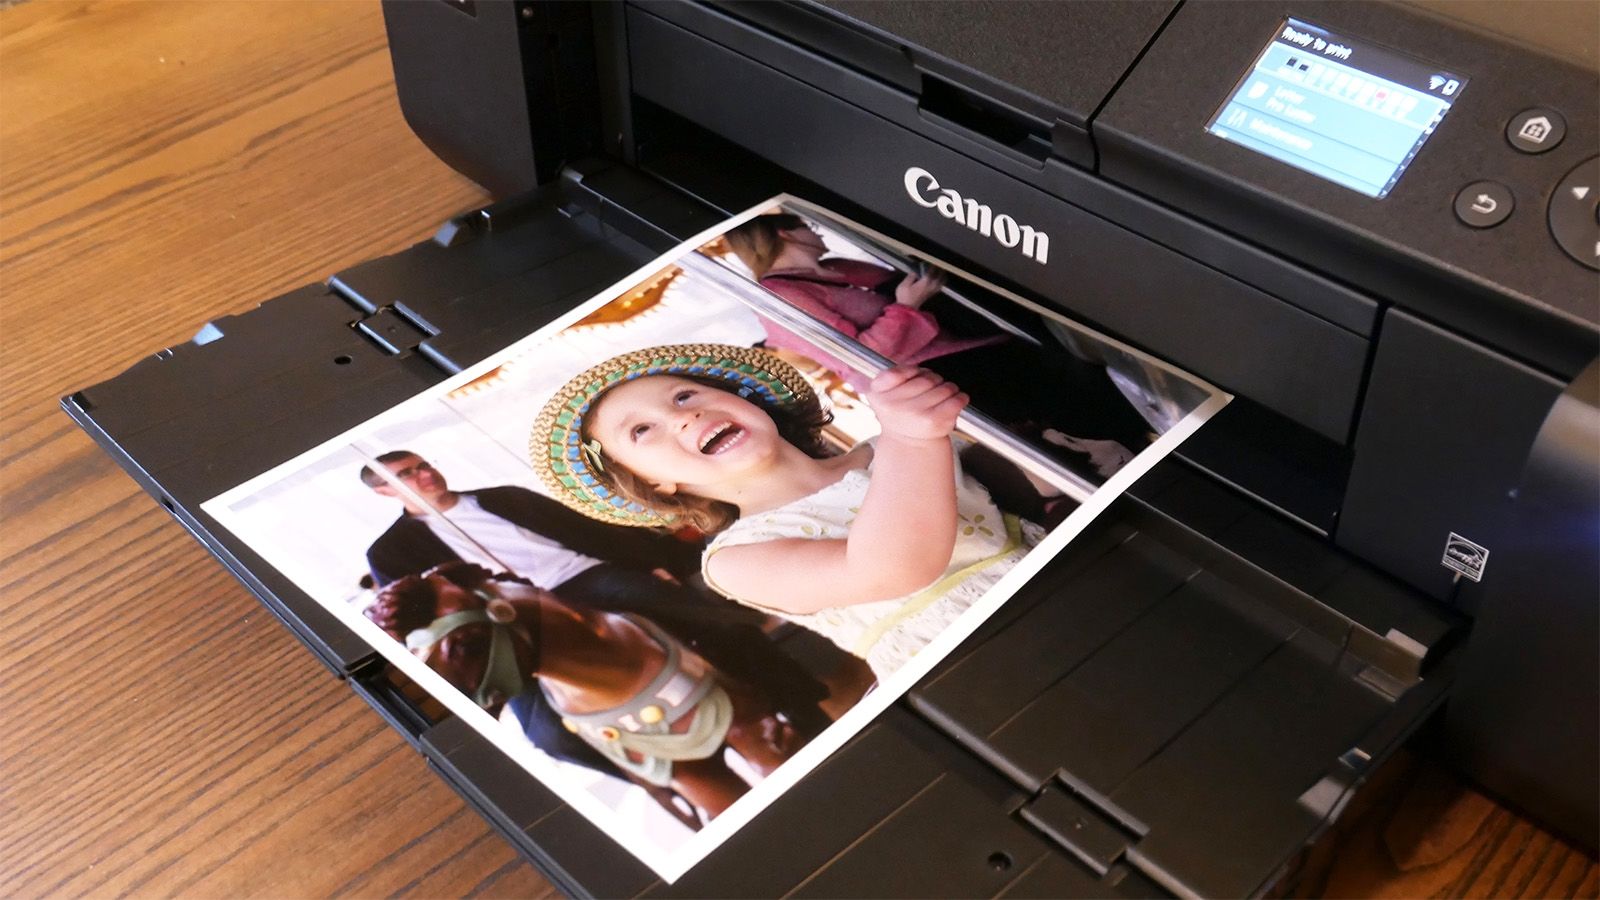 Canon Pixma Pro-1: Digital Photography Review